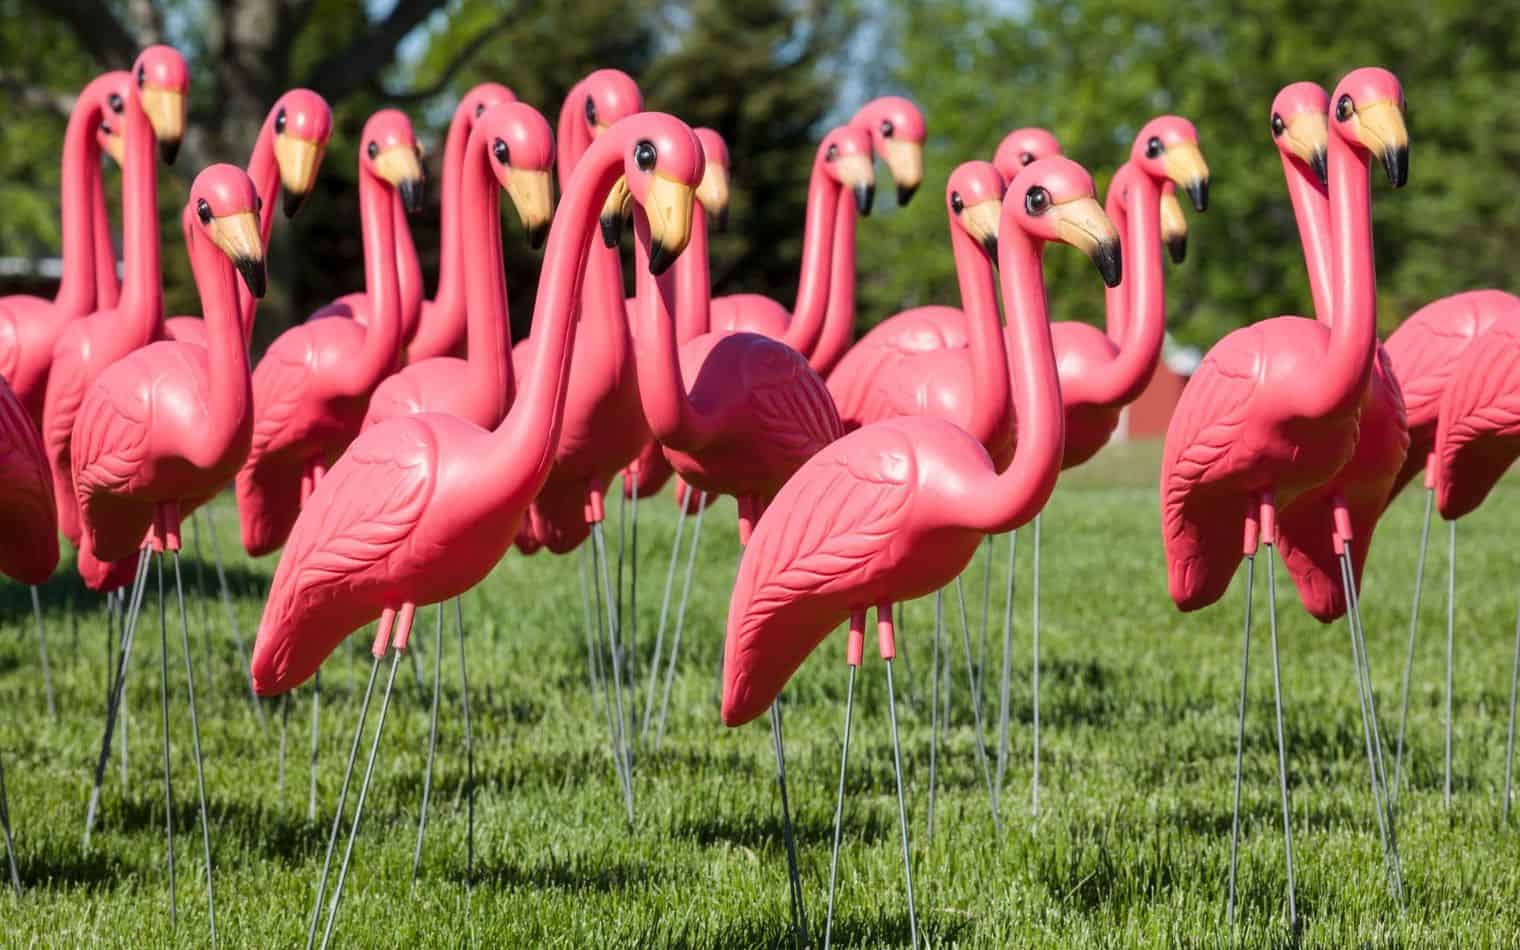 Pink Flamingo in a Yard